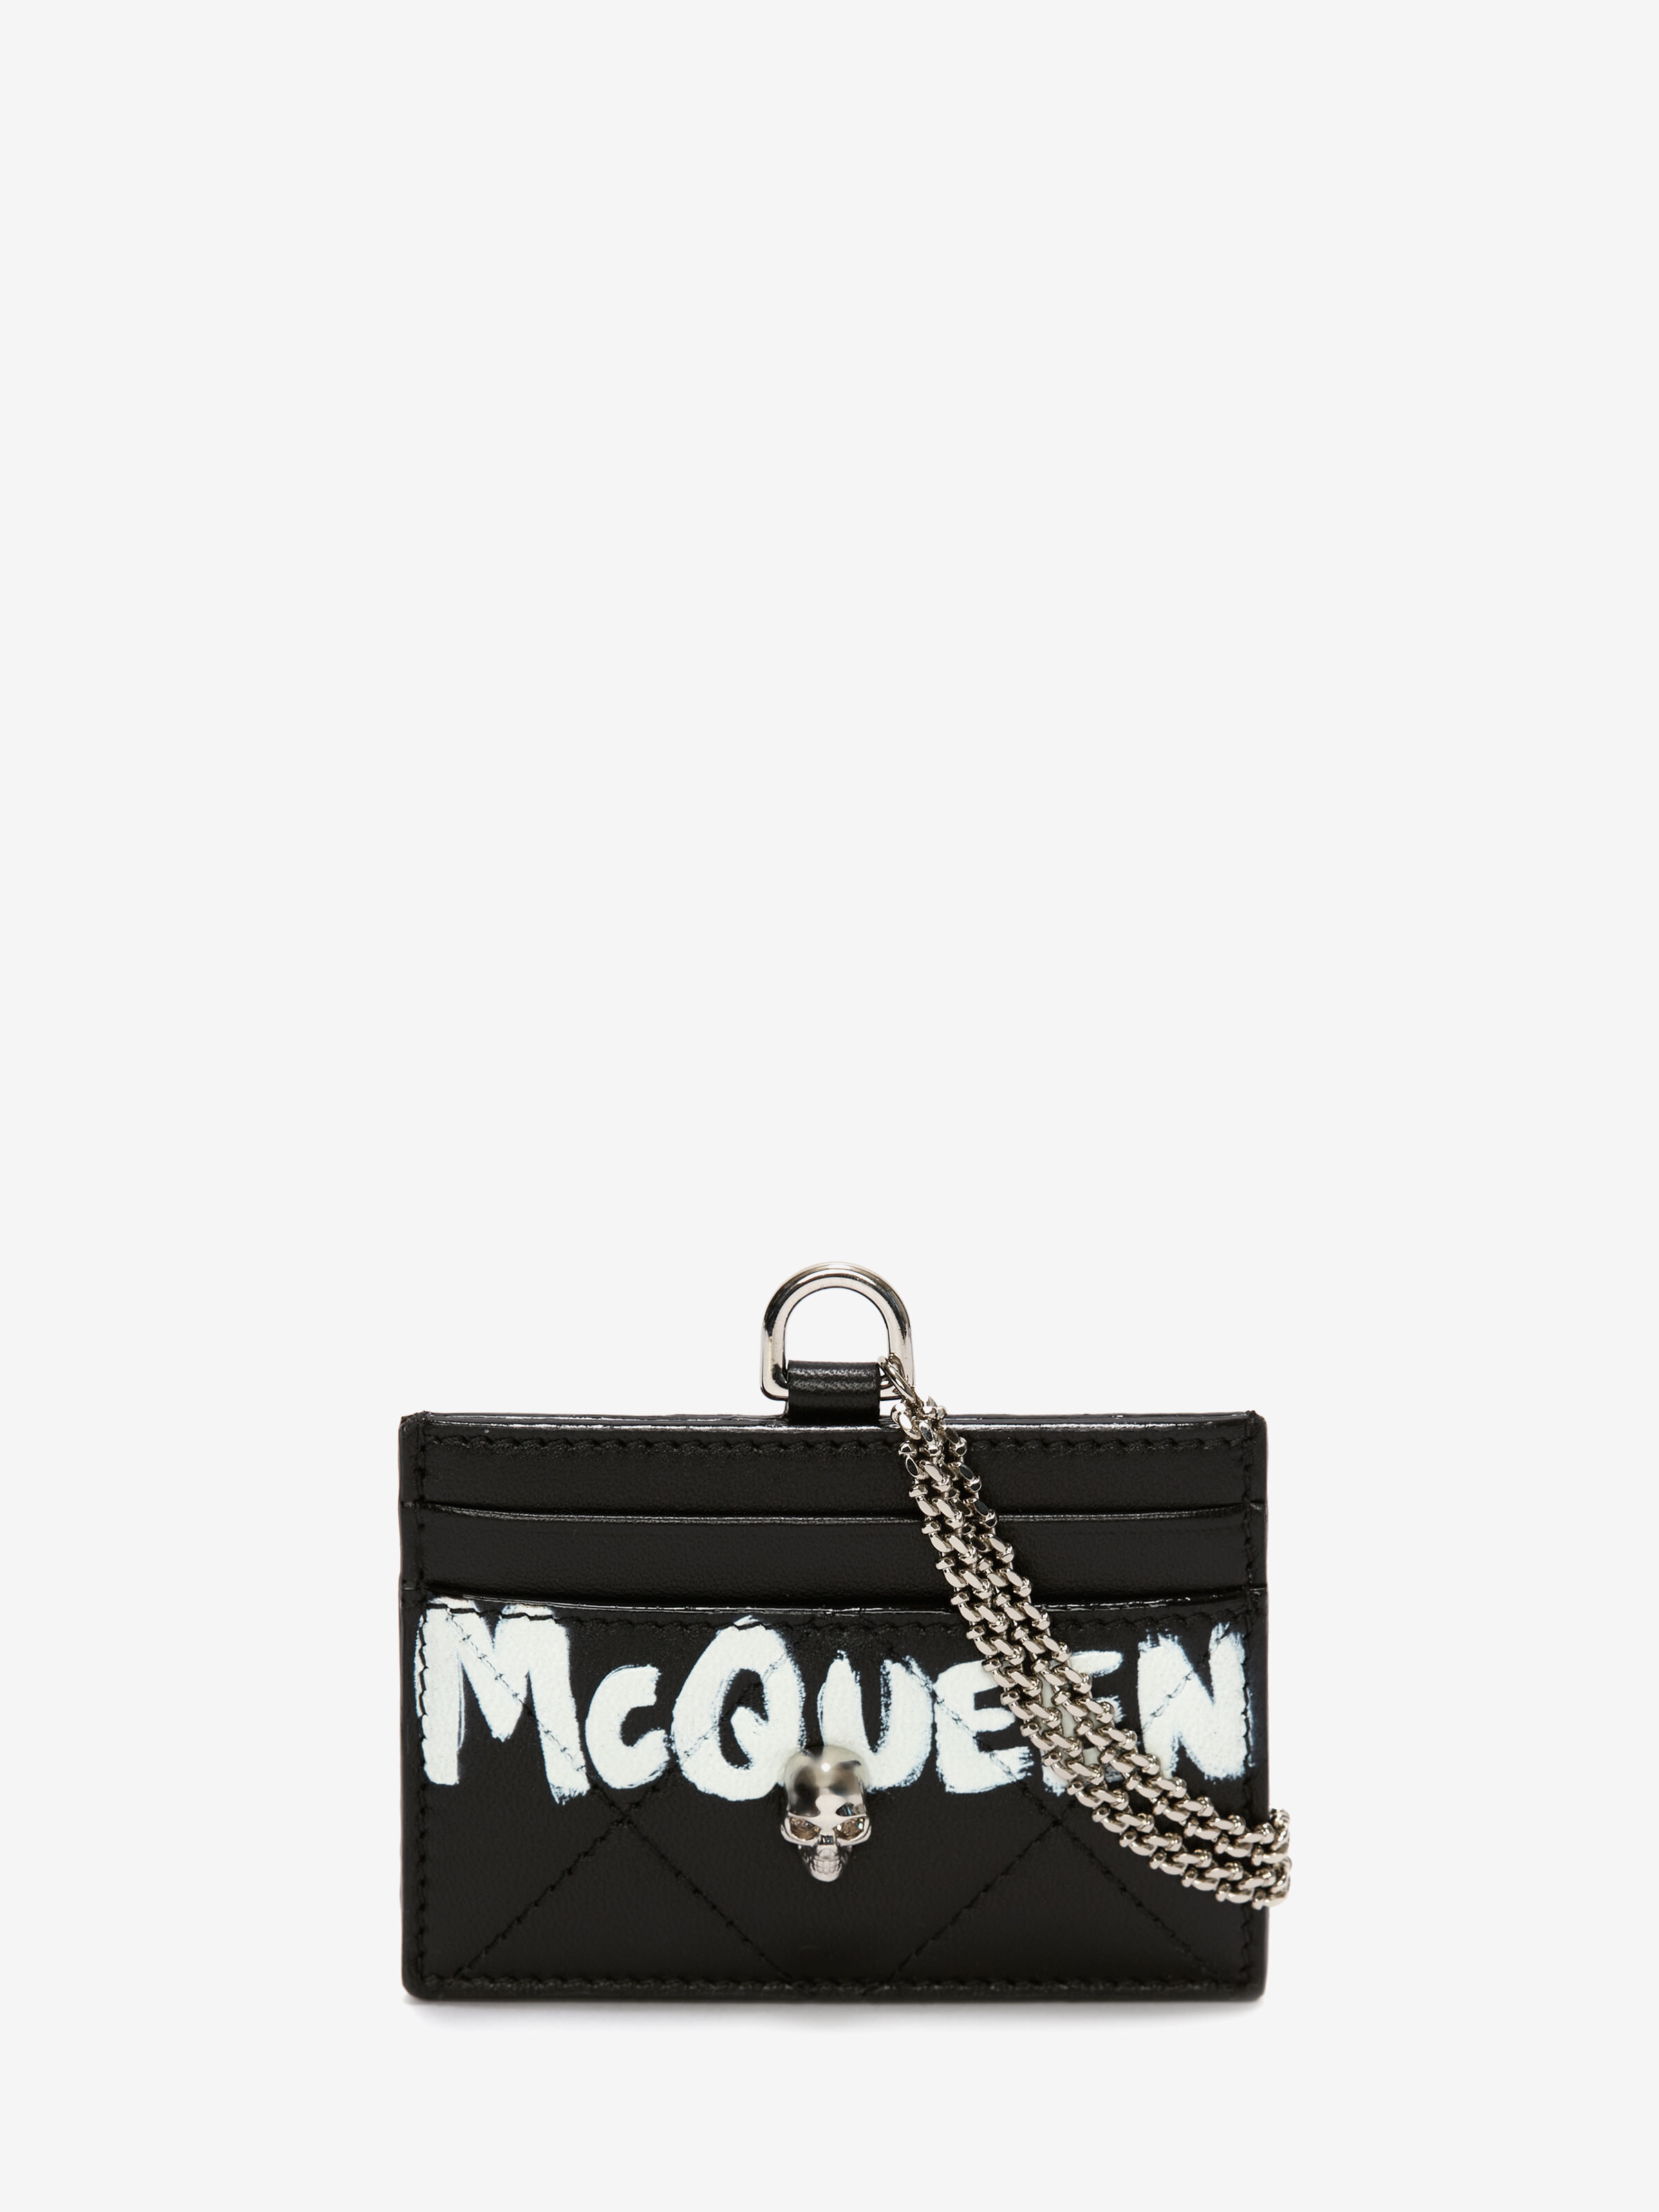 Alexander Mcqueen Mcqueen Graffiti Card Holder With Chain In Black/ivory